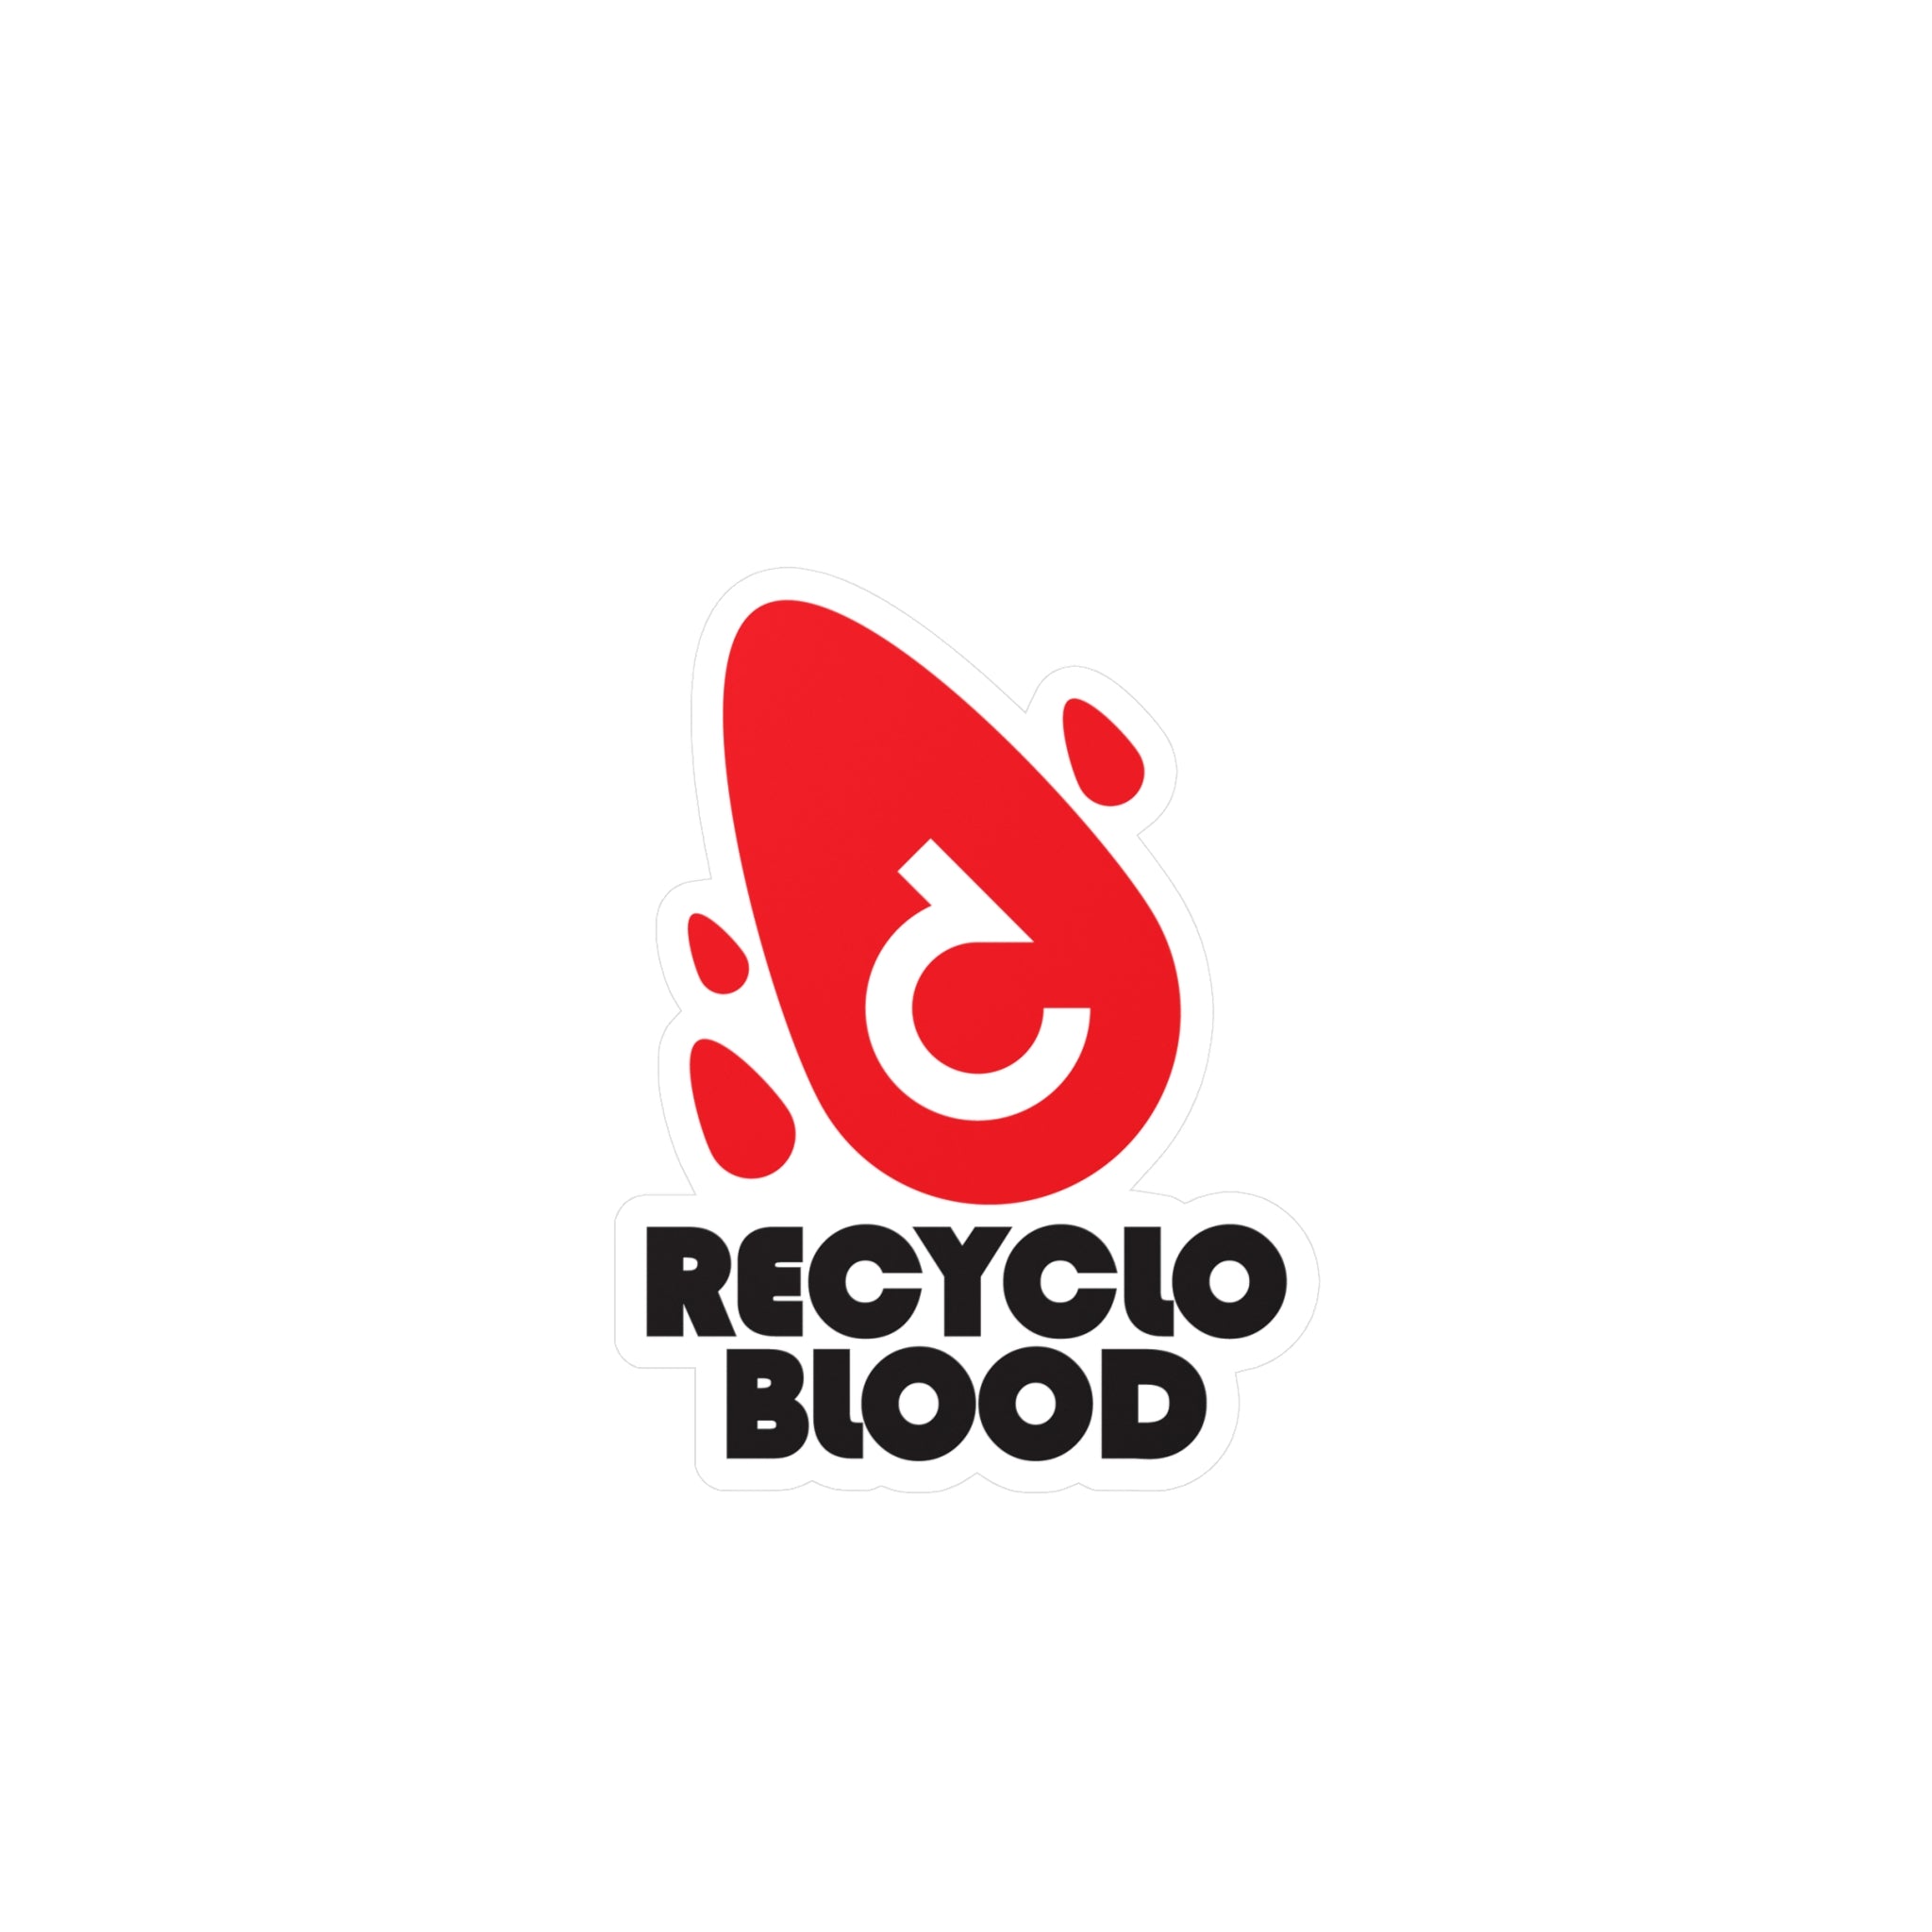 RECYCLO BLOOD Sticker